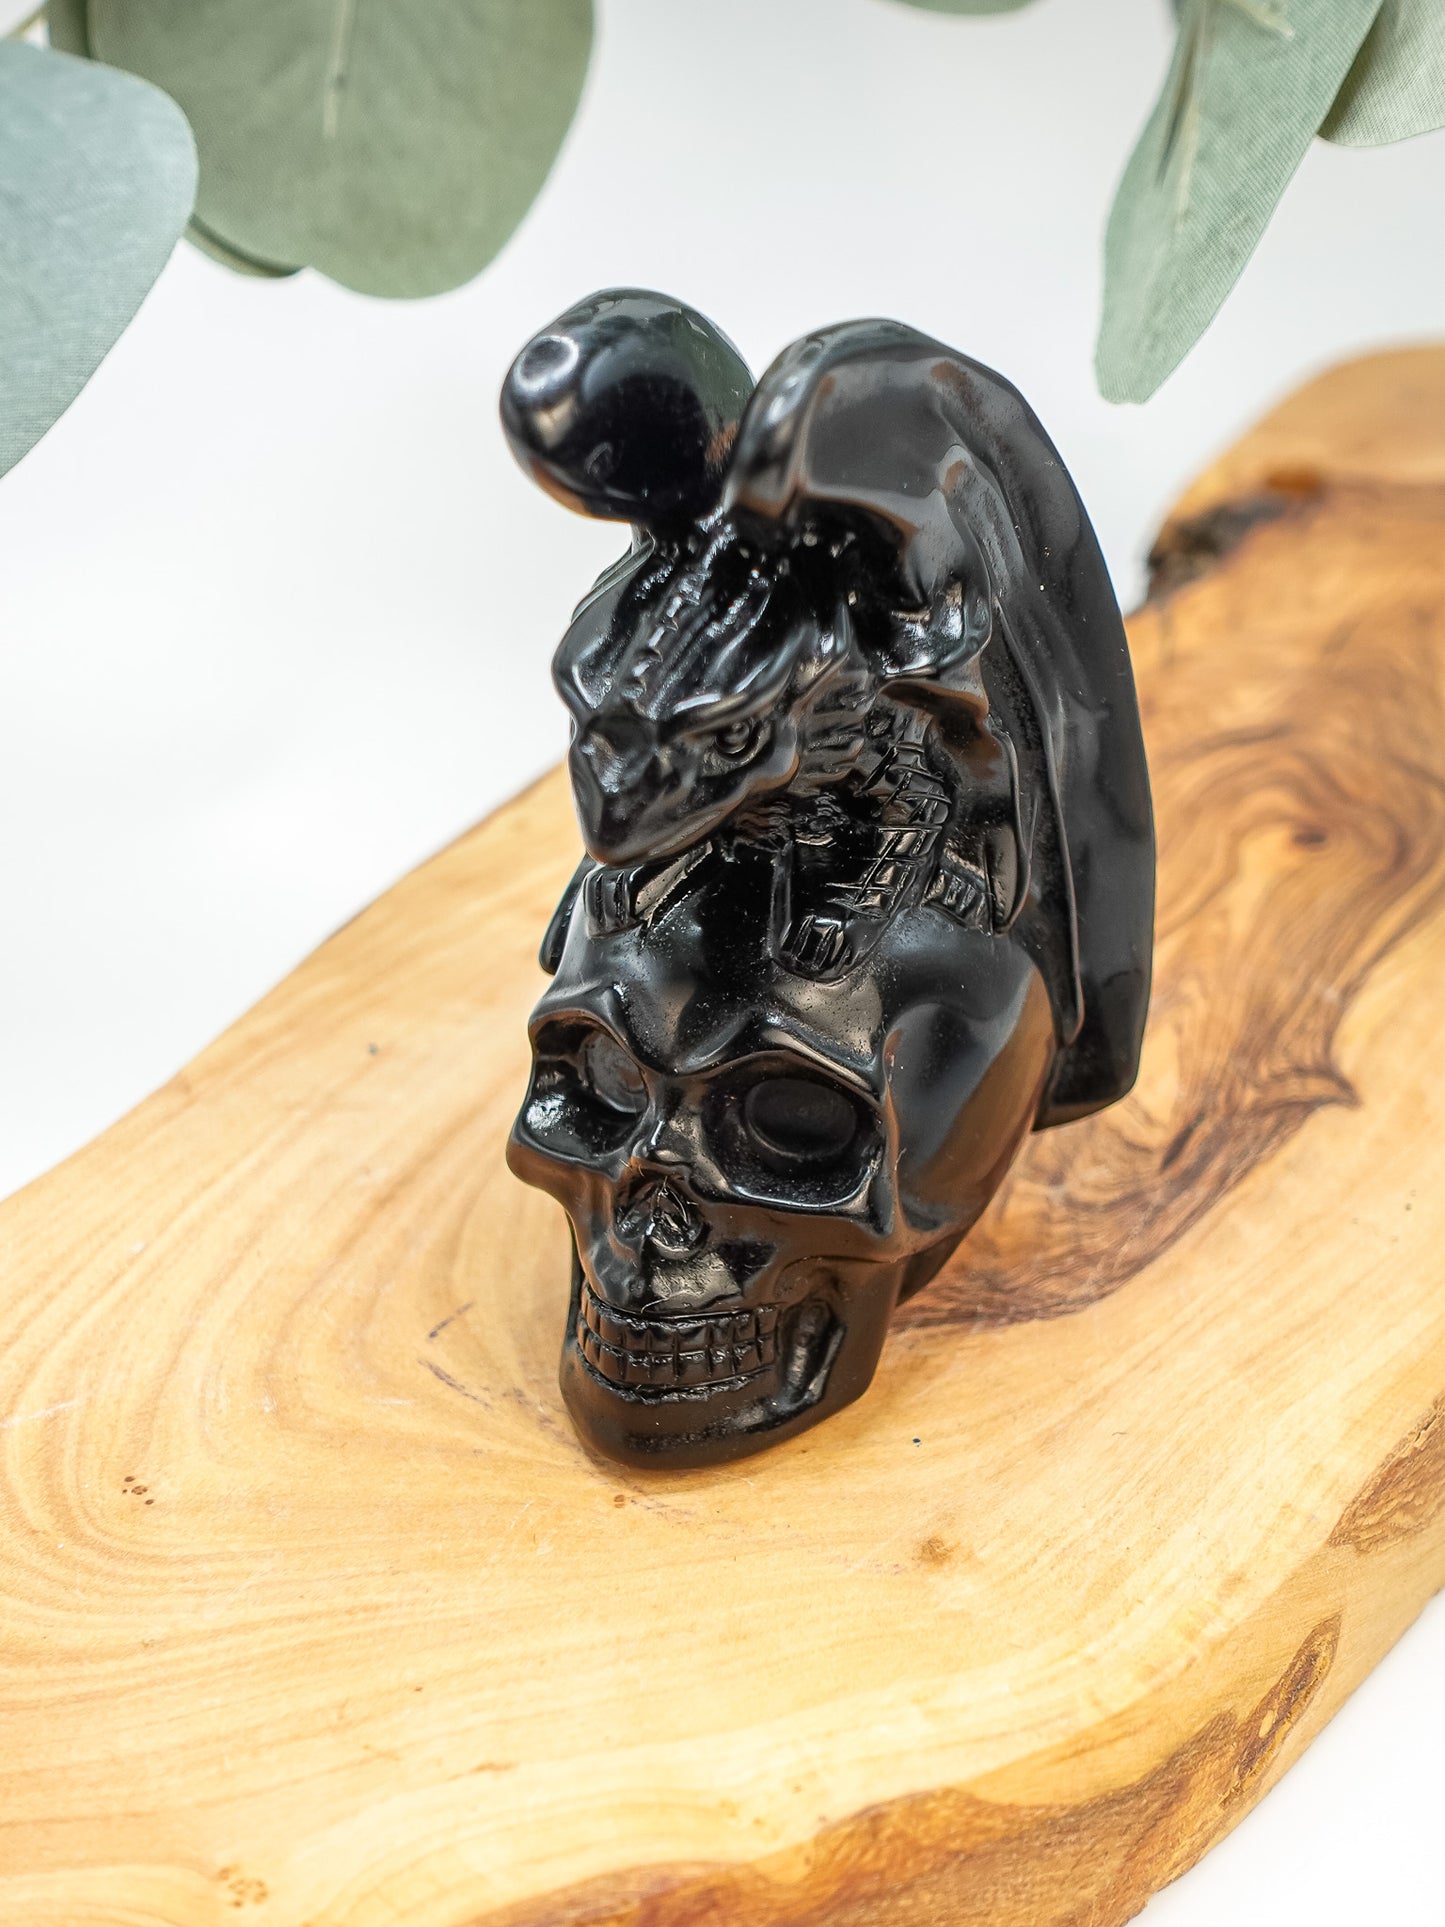 Black Obsidian Skull & Gargoyle Carving